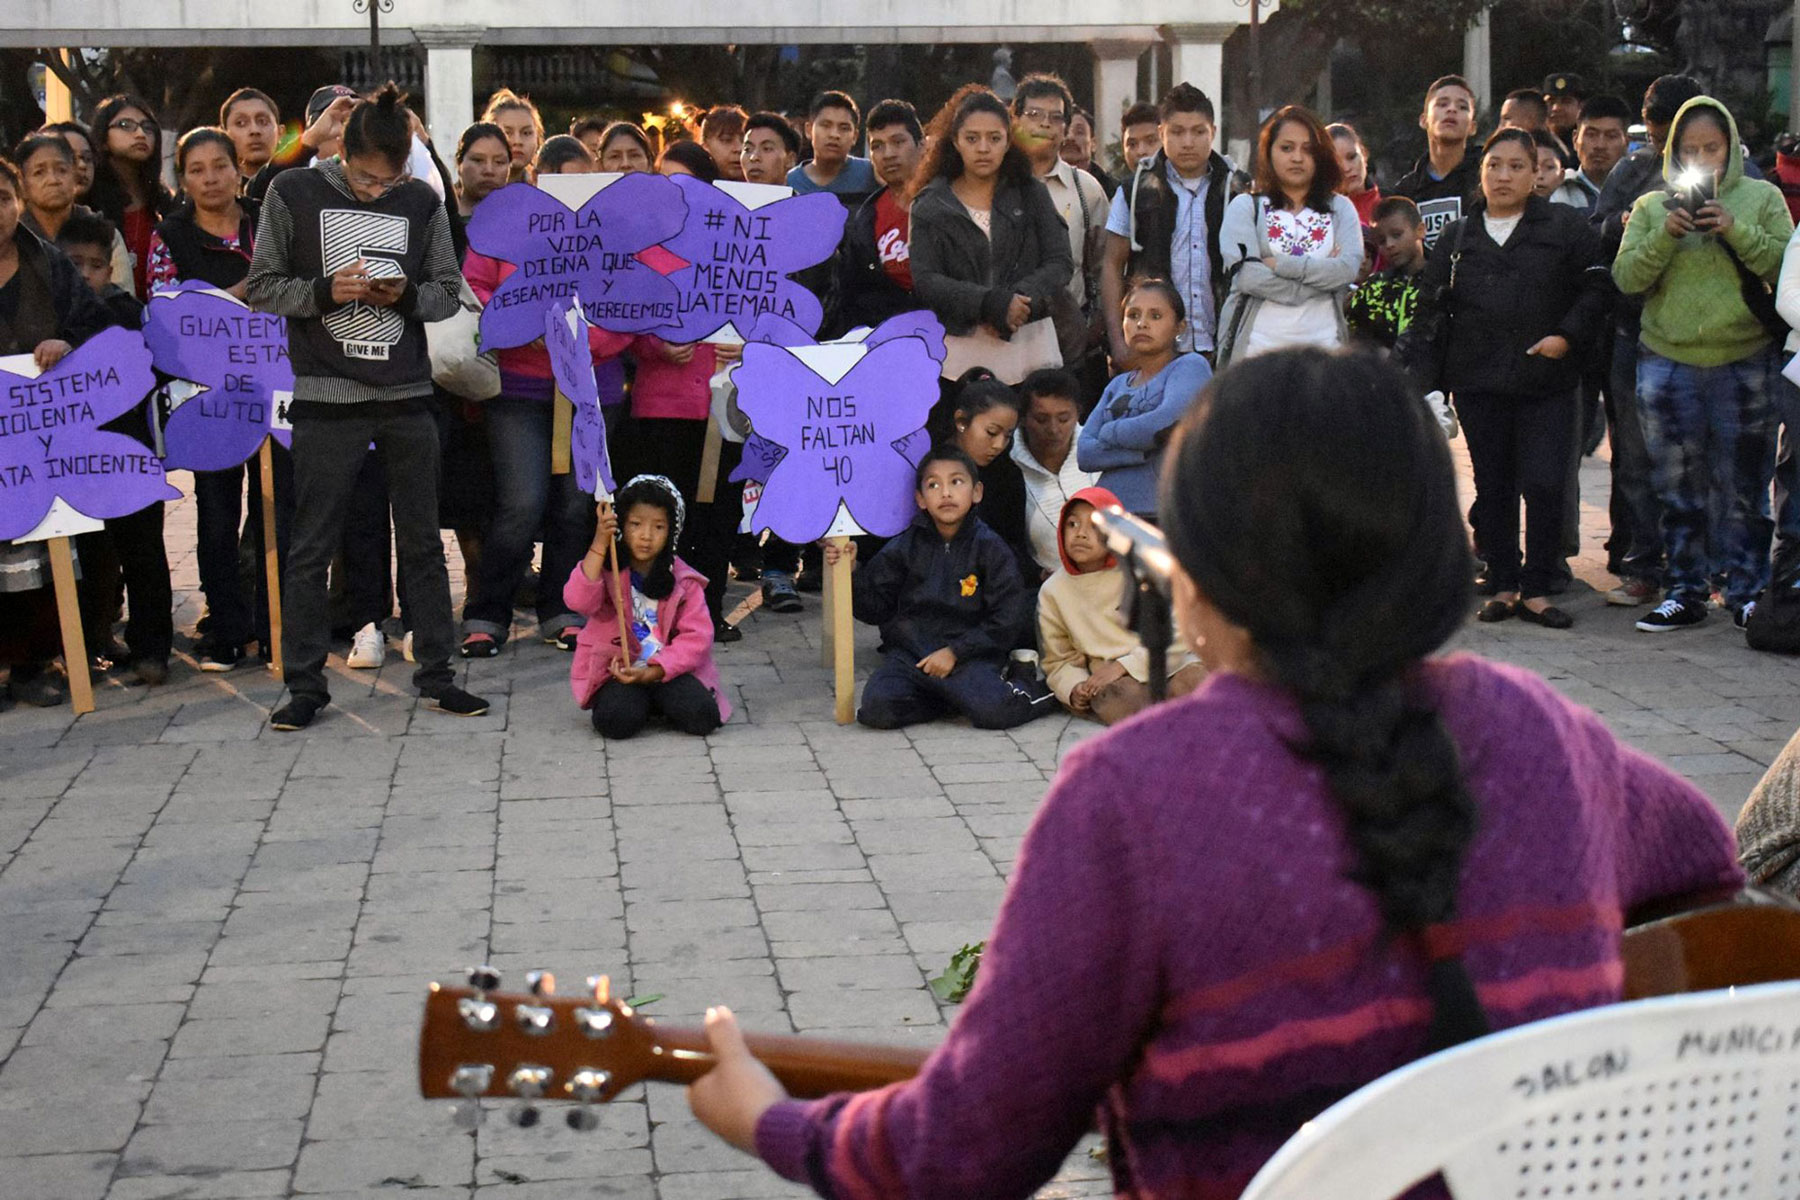 Juliette Gimon Courage Award winner Asociación Generando﻿ participates in a vigil for 41 girls murdered in Guatemala.